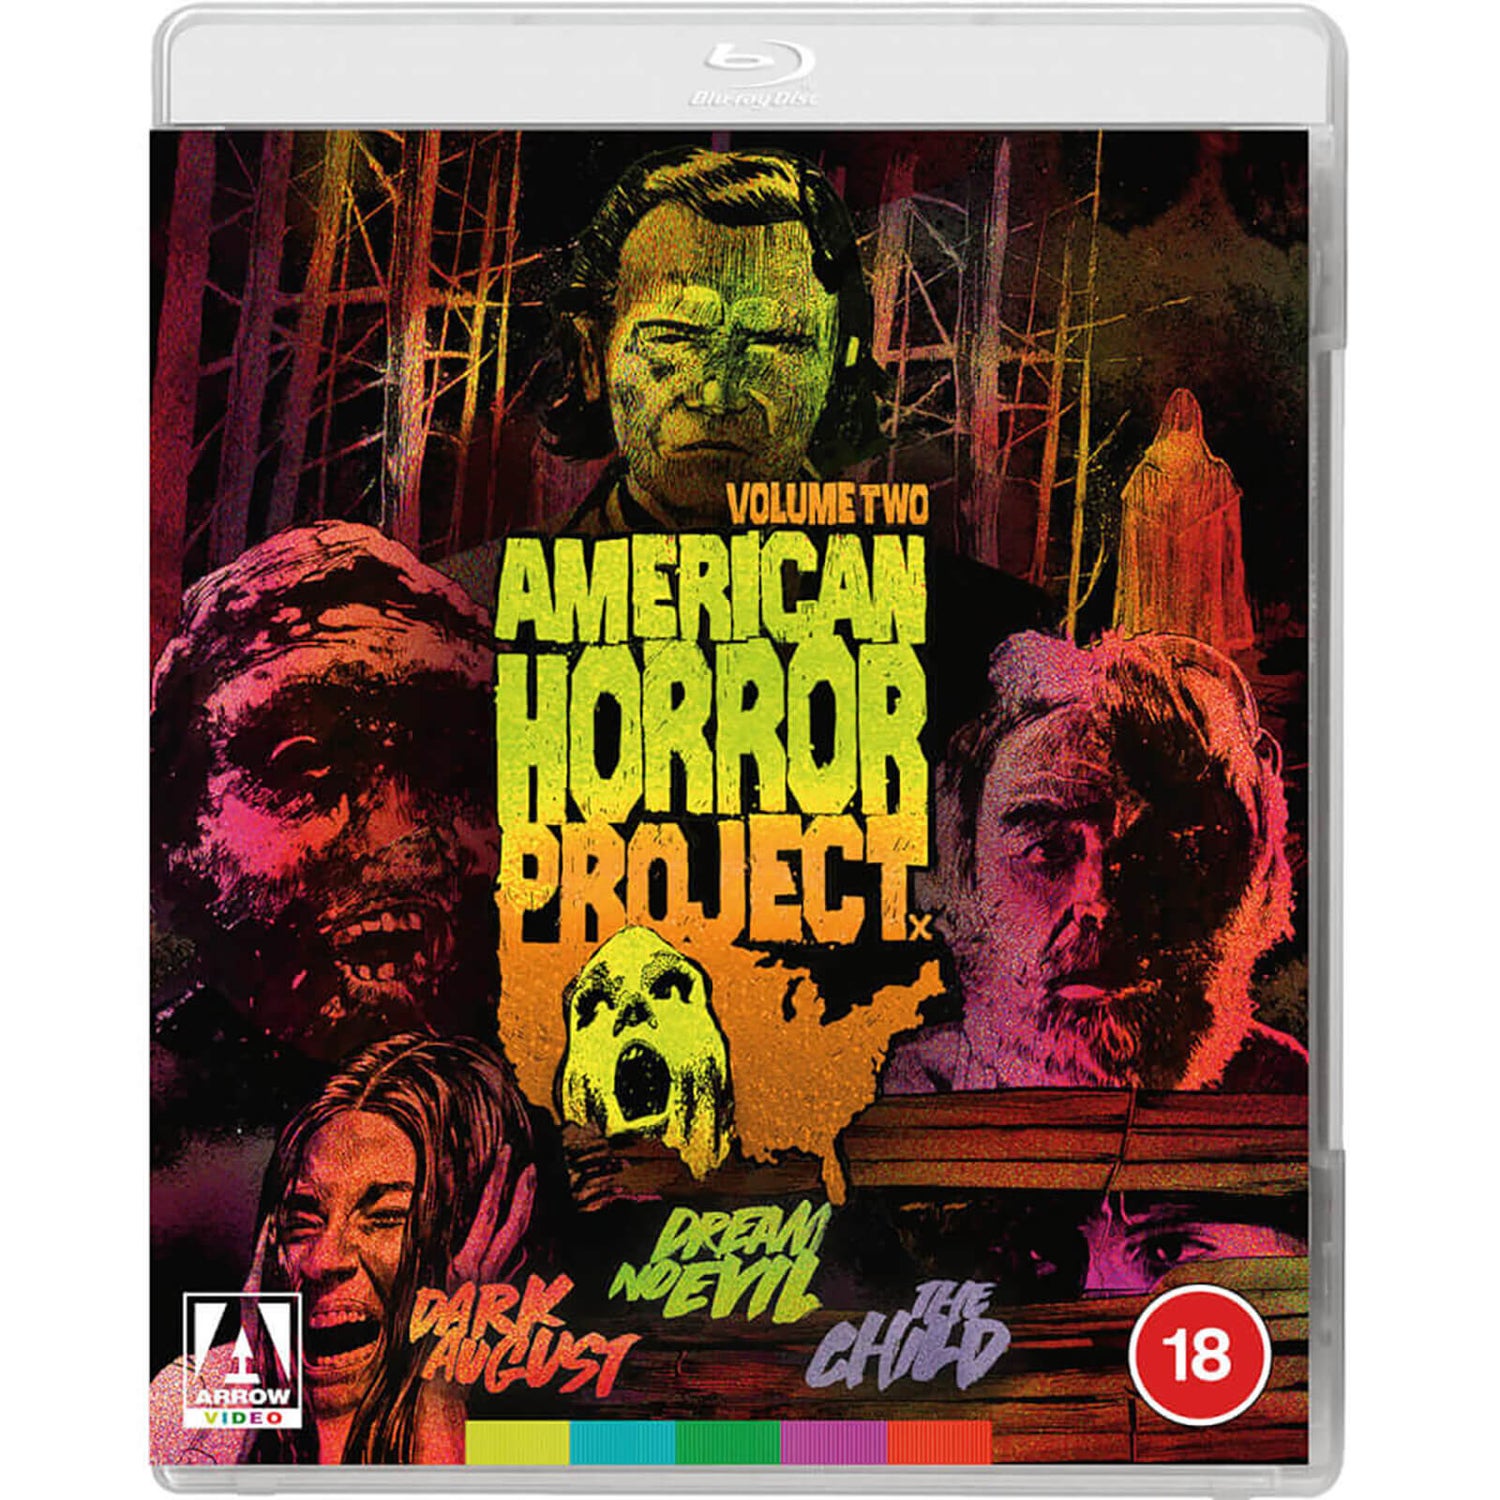 American Horror Project Vol. 2 Blu-ray